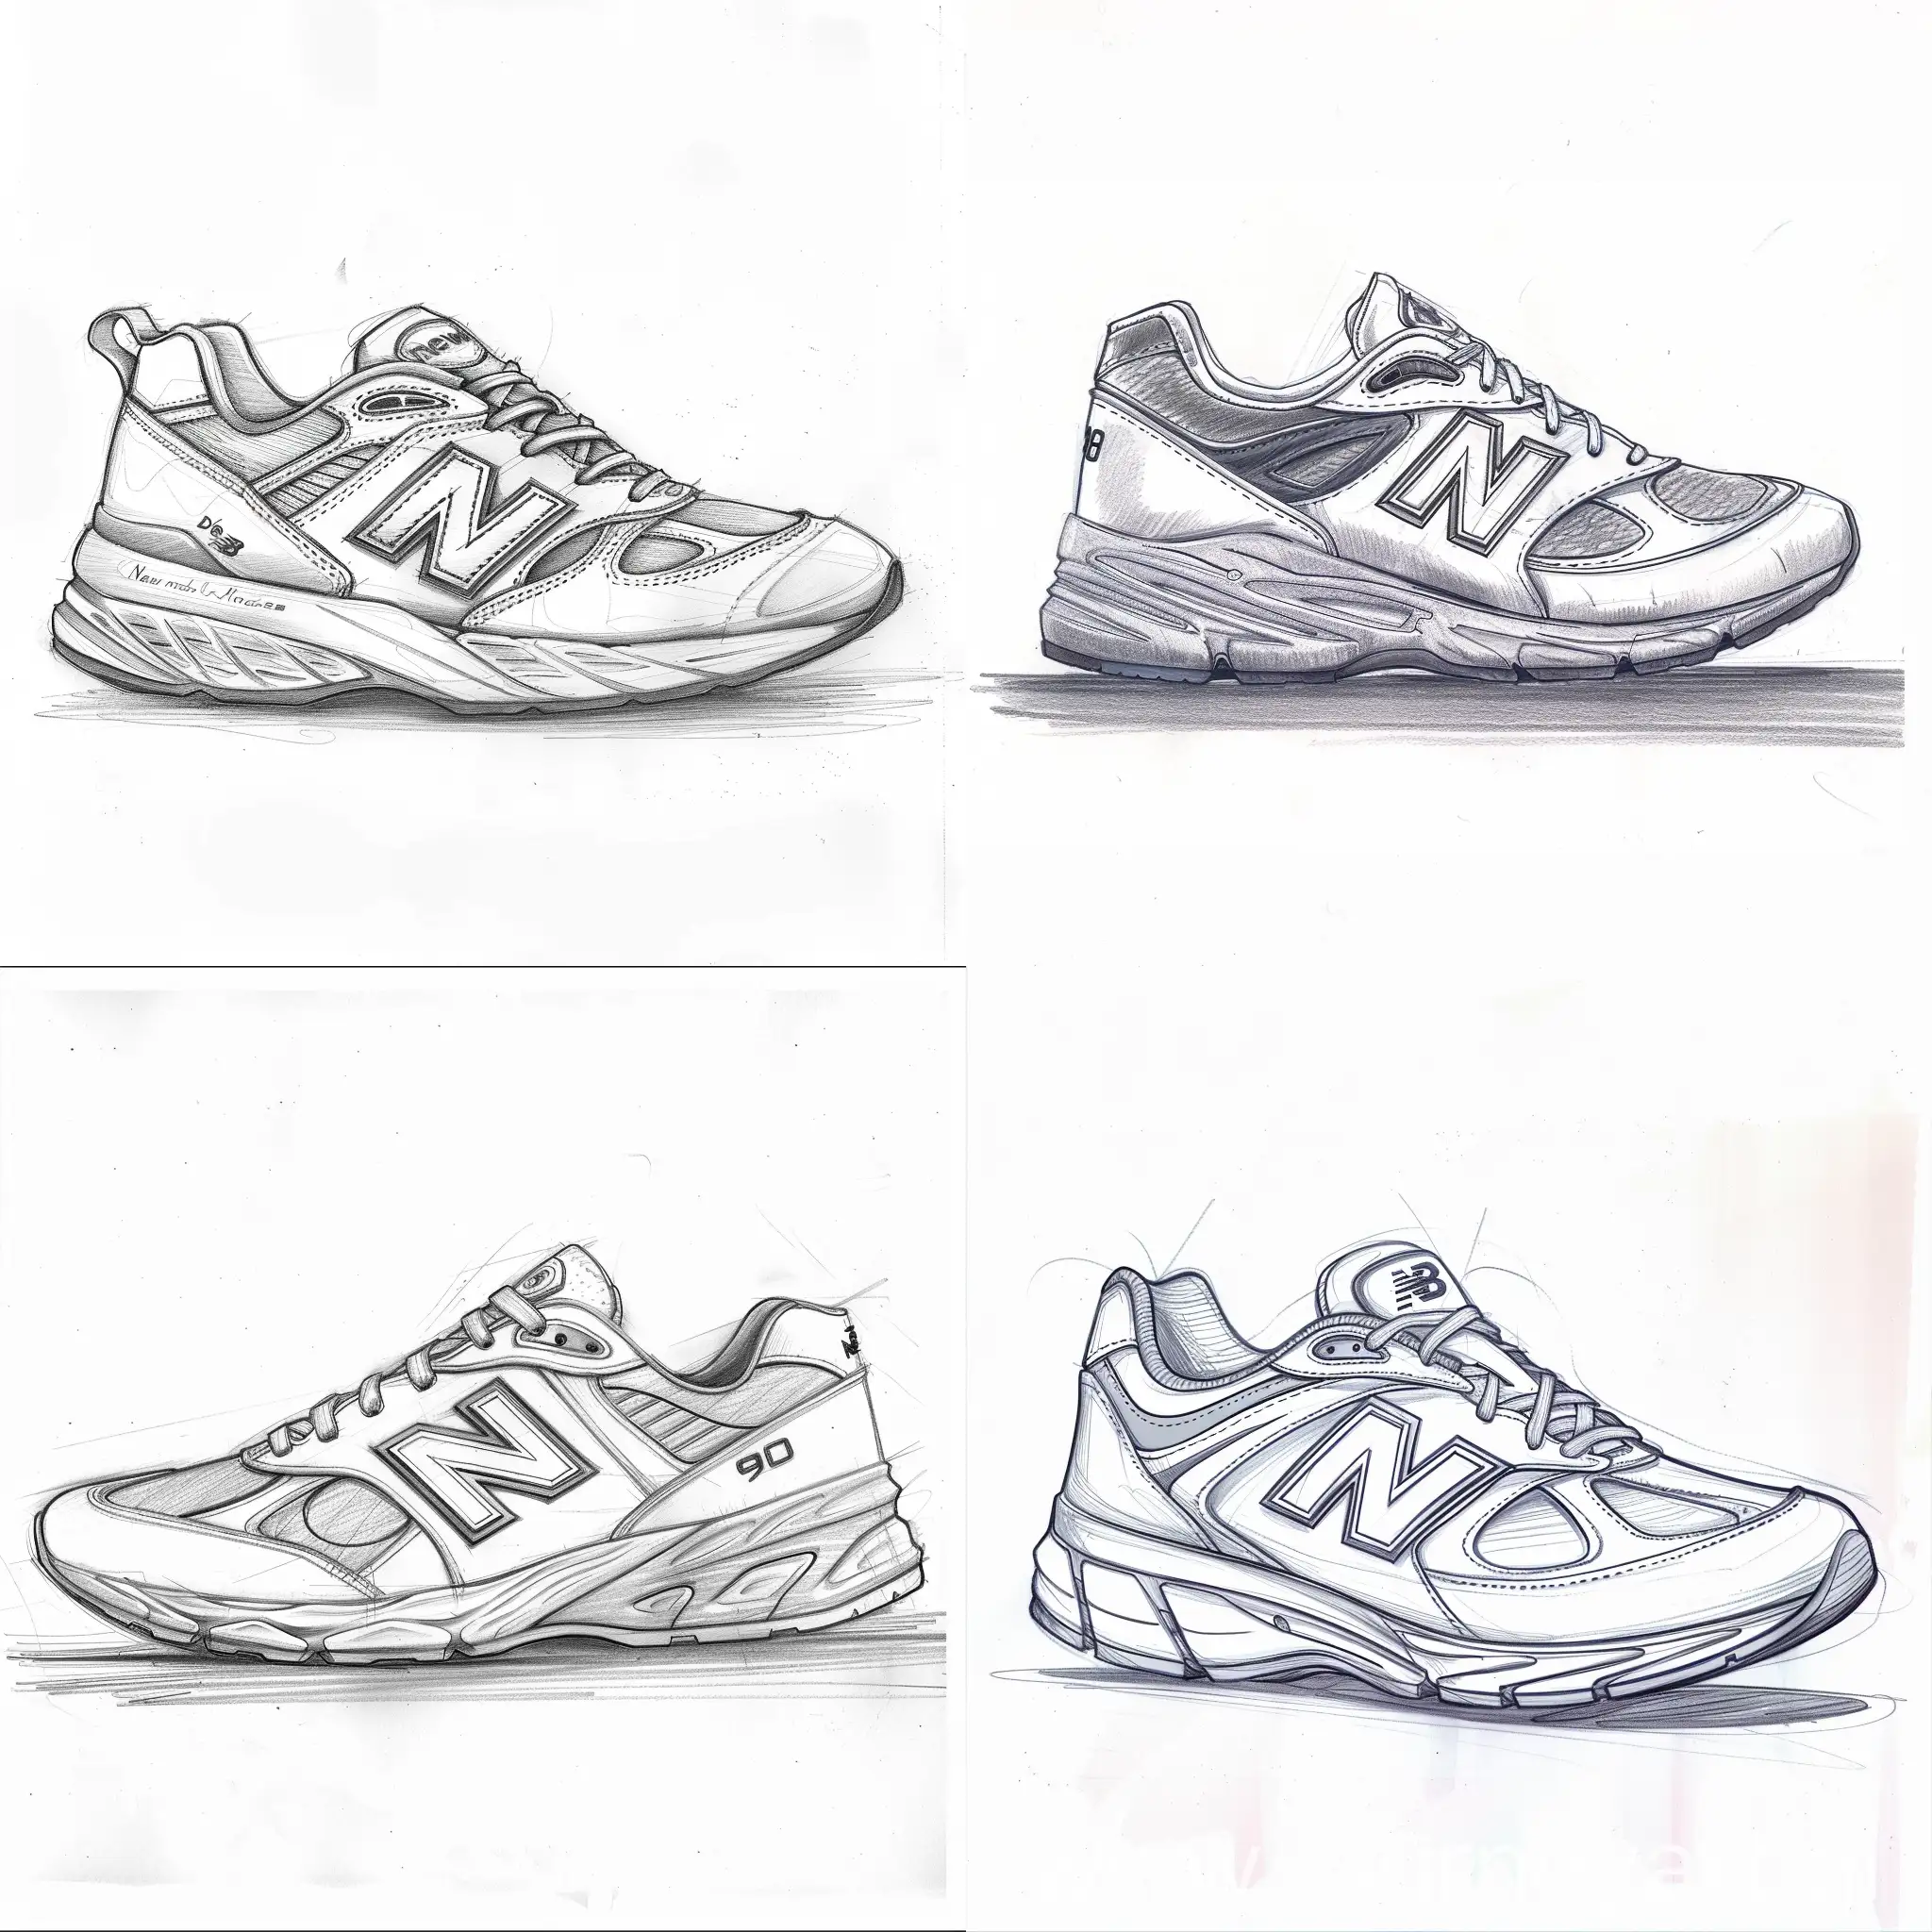 Stylish-New-Balance-990v4-Sneaker-Sketch-in-11-Aspect-Ratio